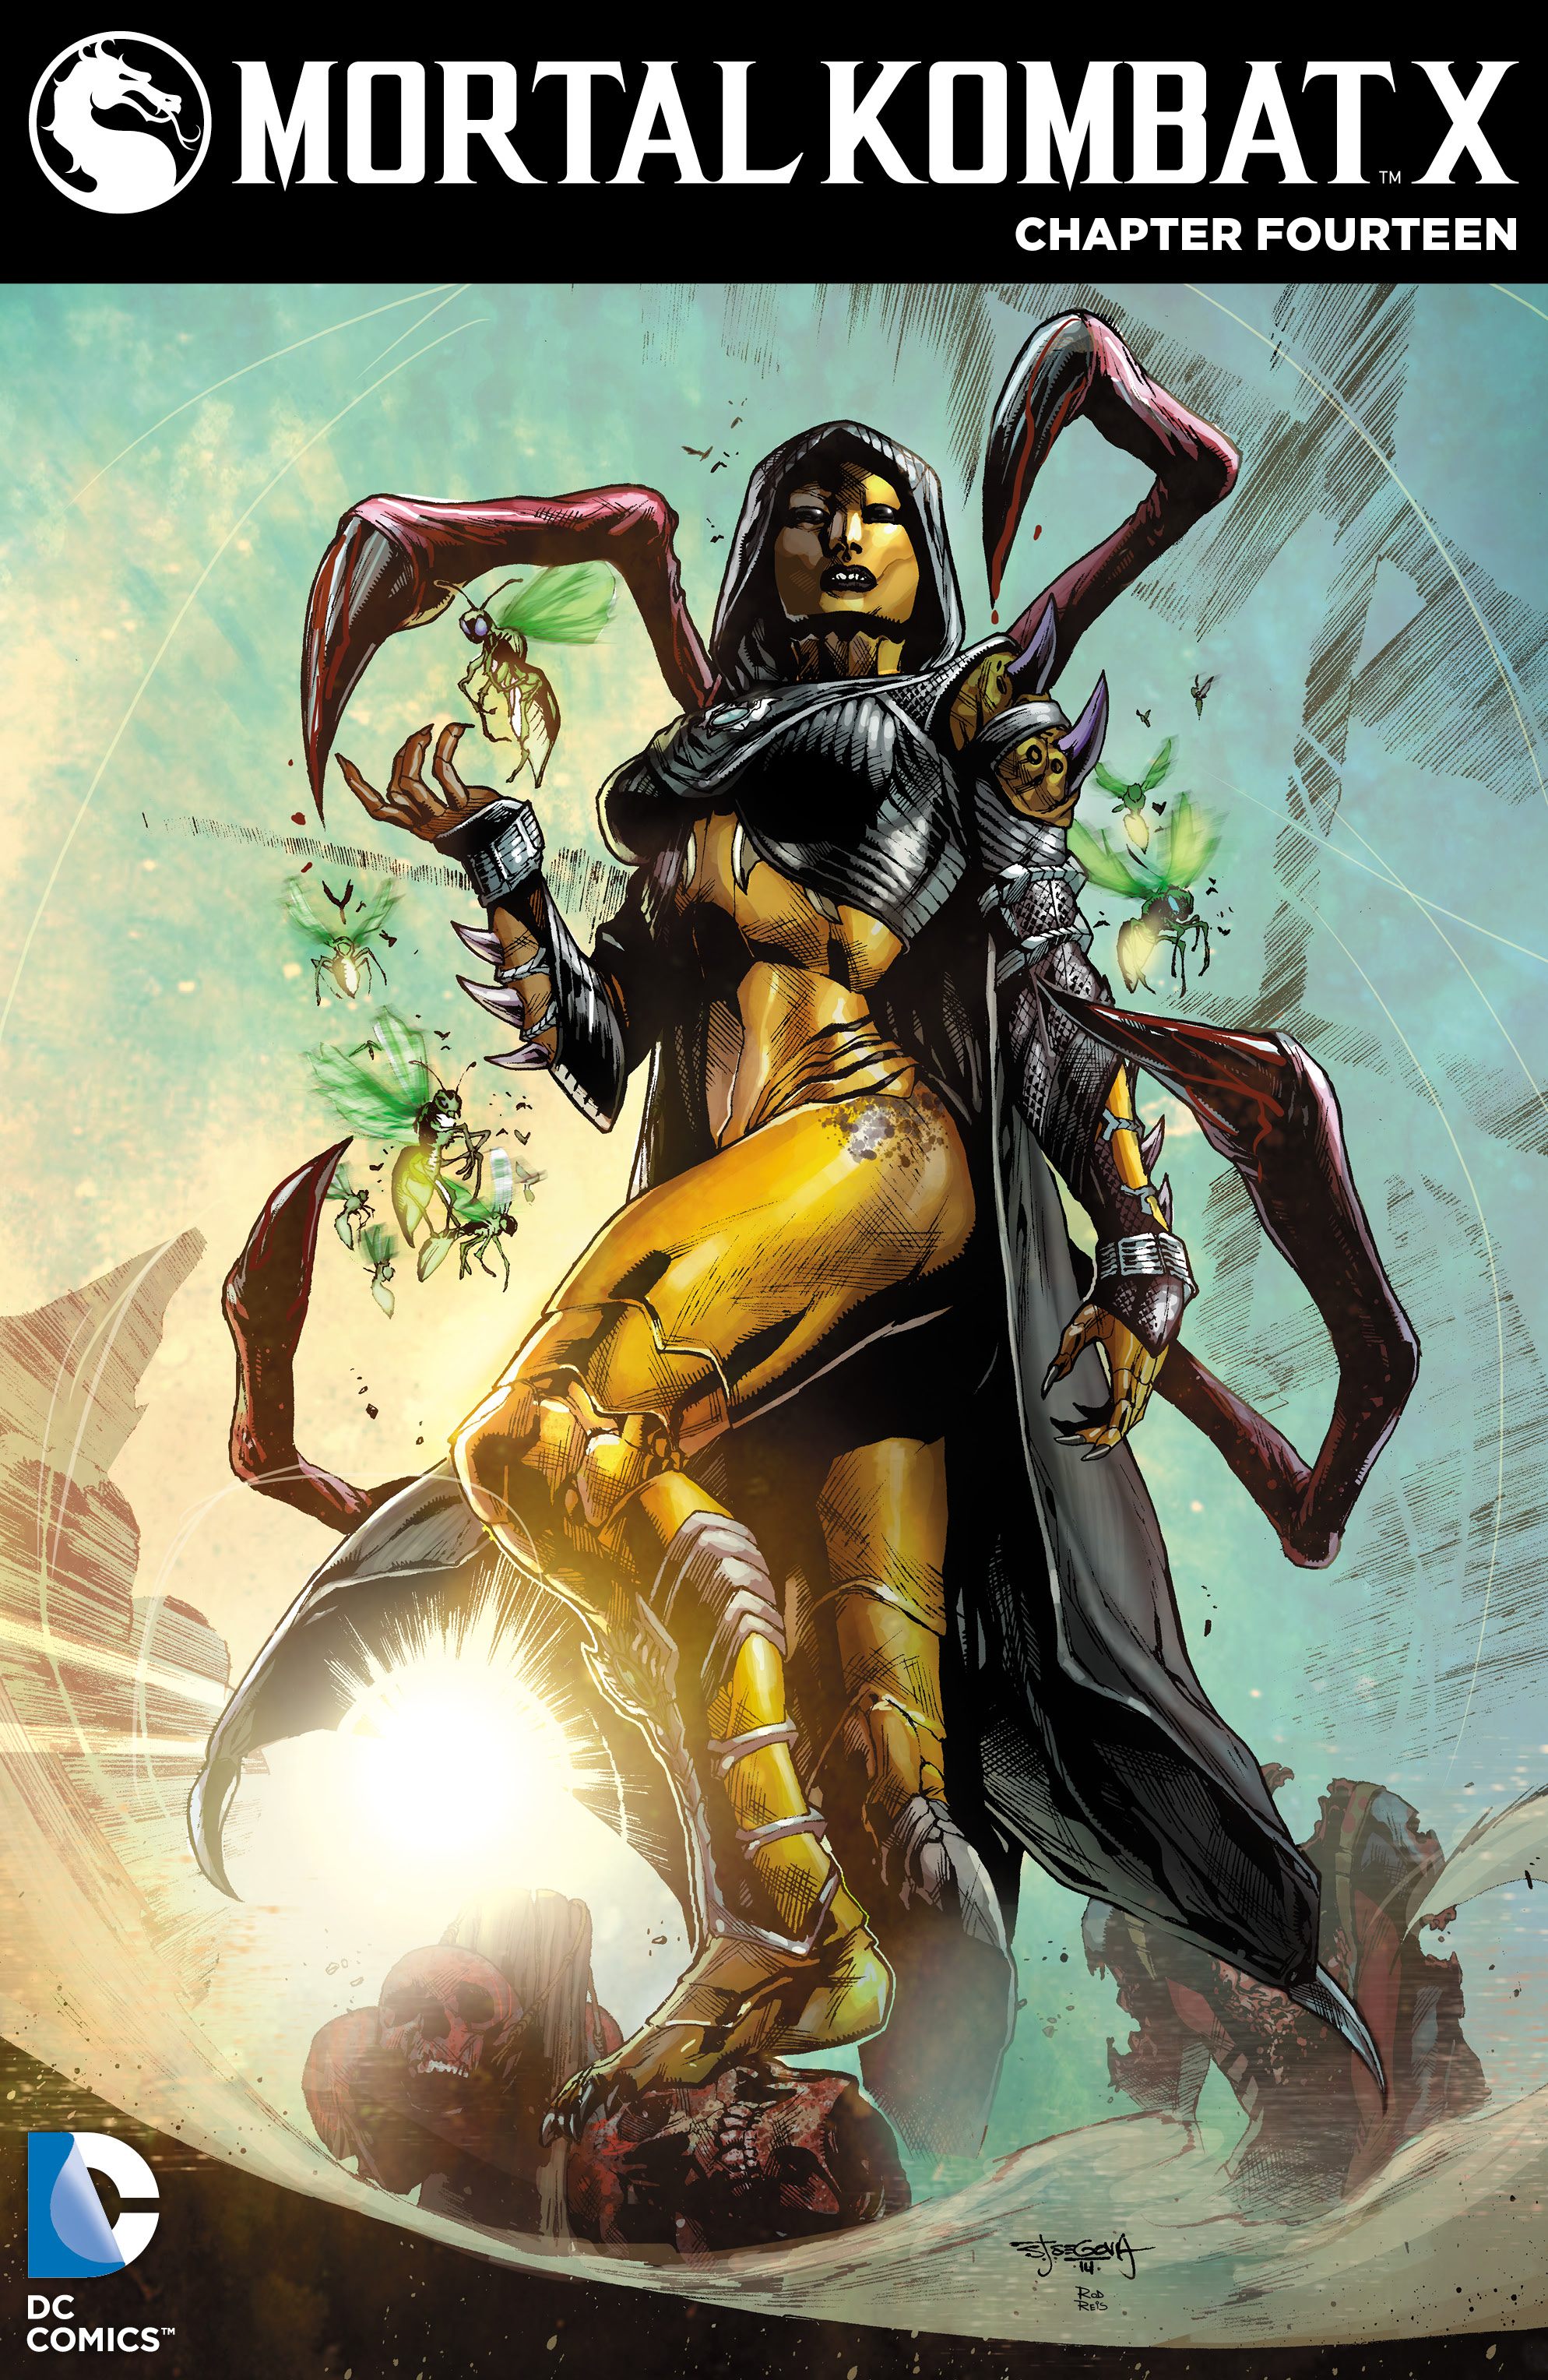 Mortal Kombat X #14 preview images